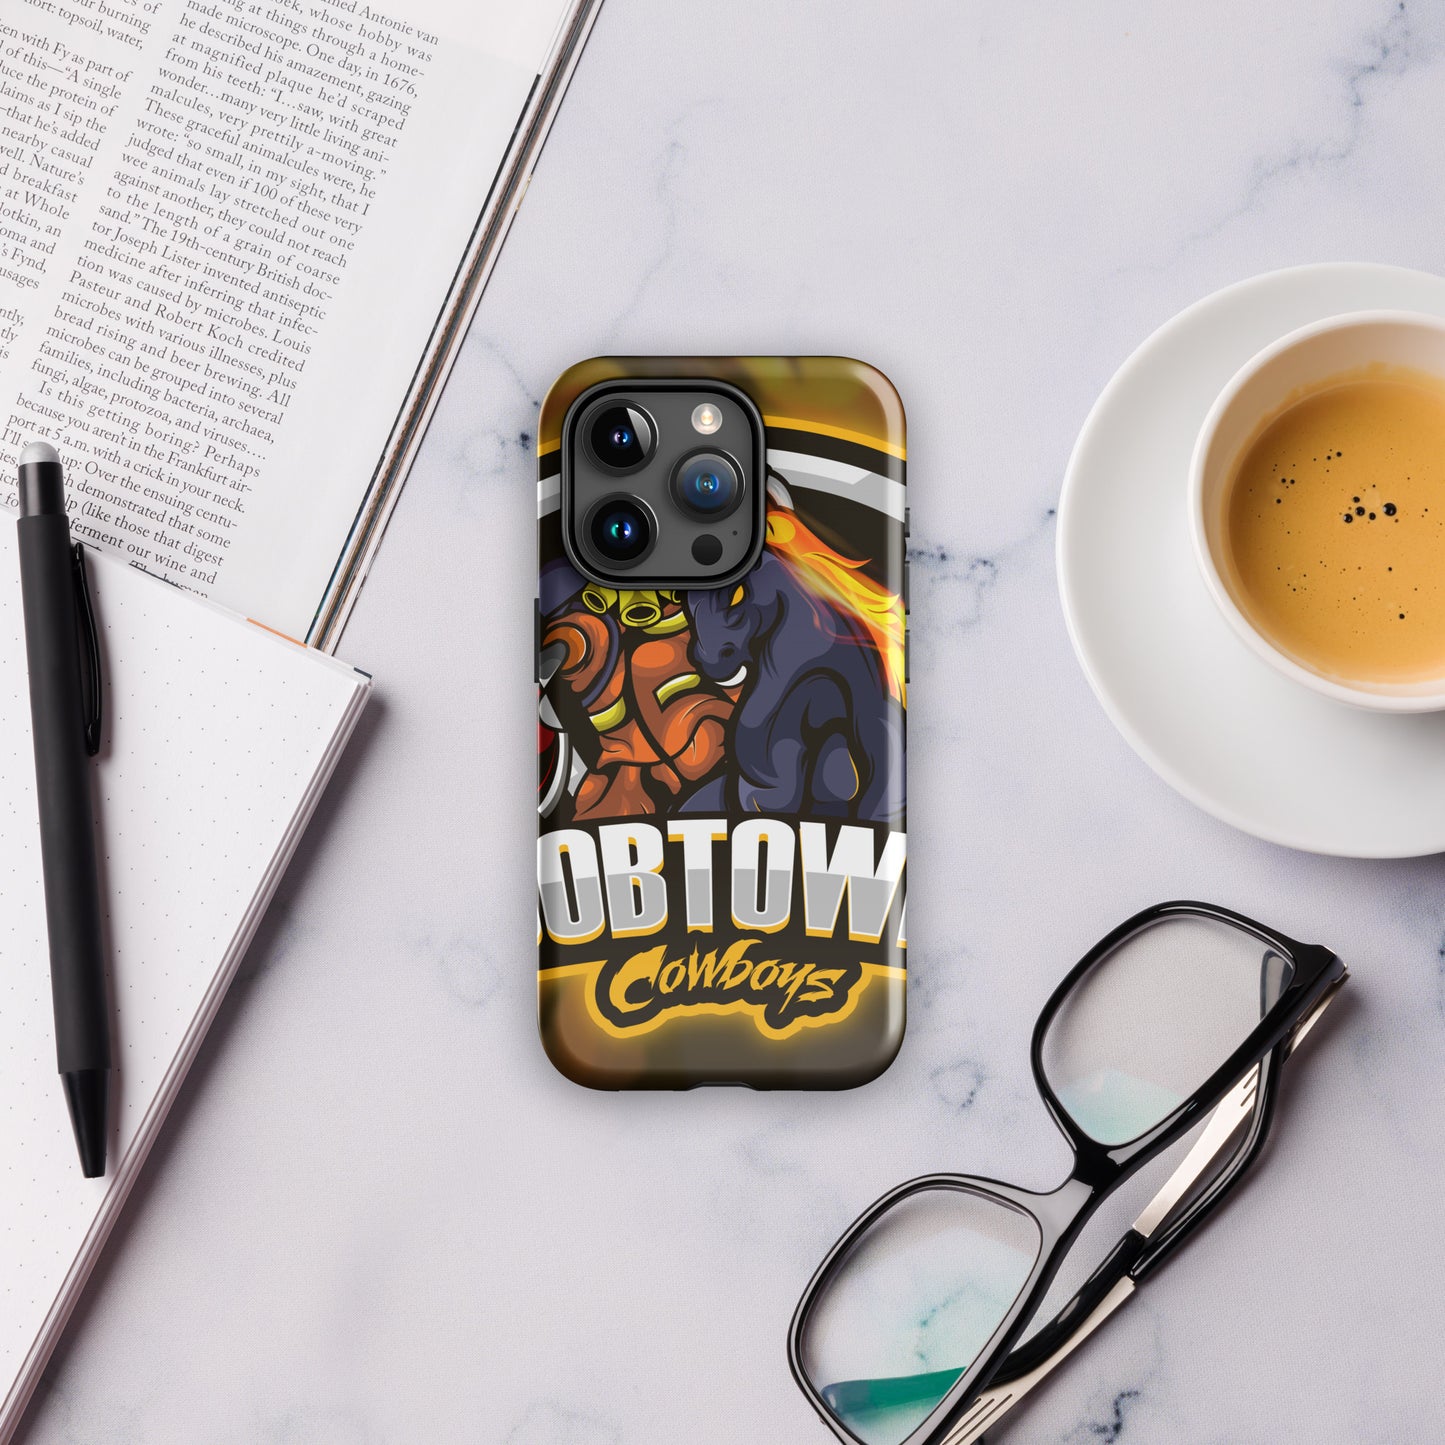 Jobtown Cowboys Firefighter Tough Case for iPhone®- The Original Design